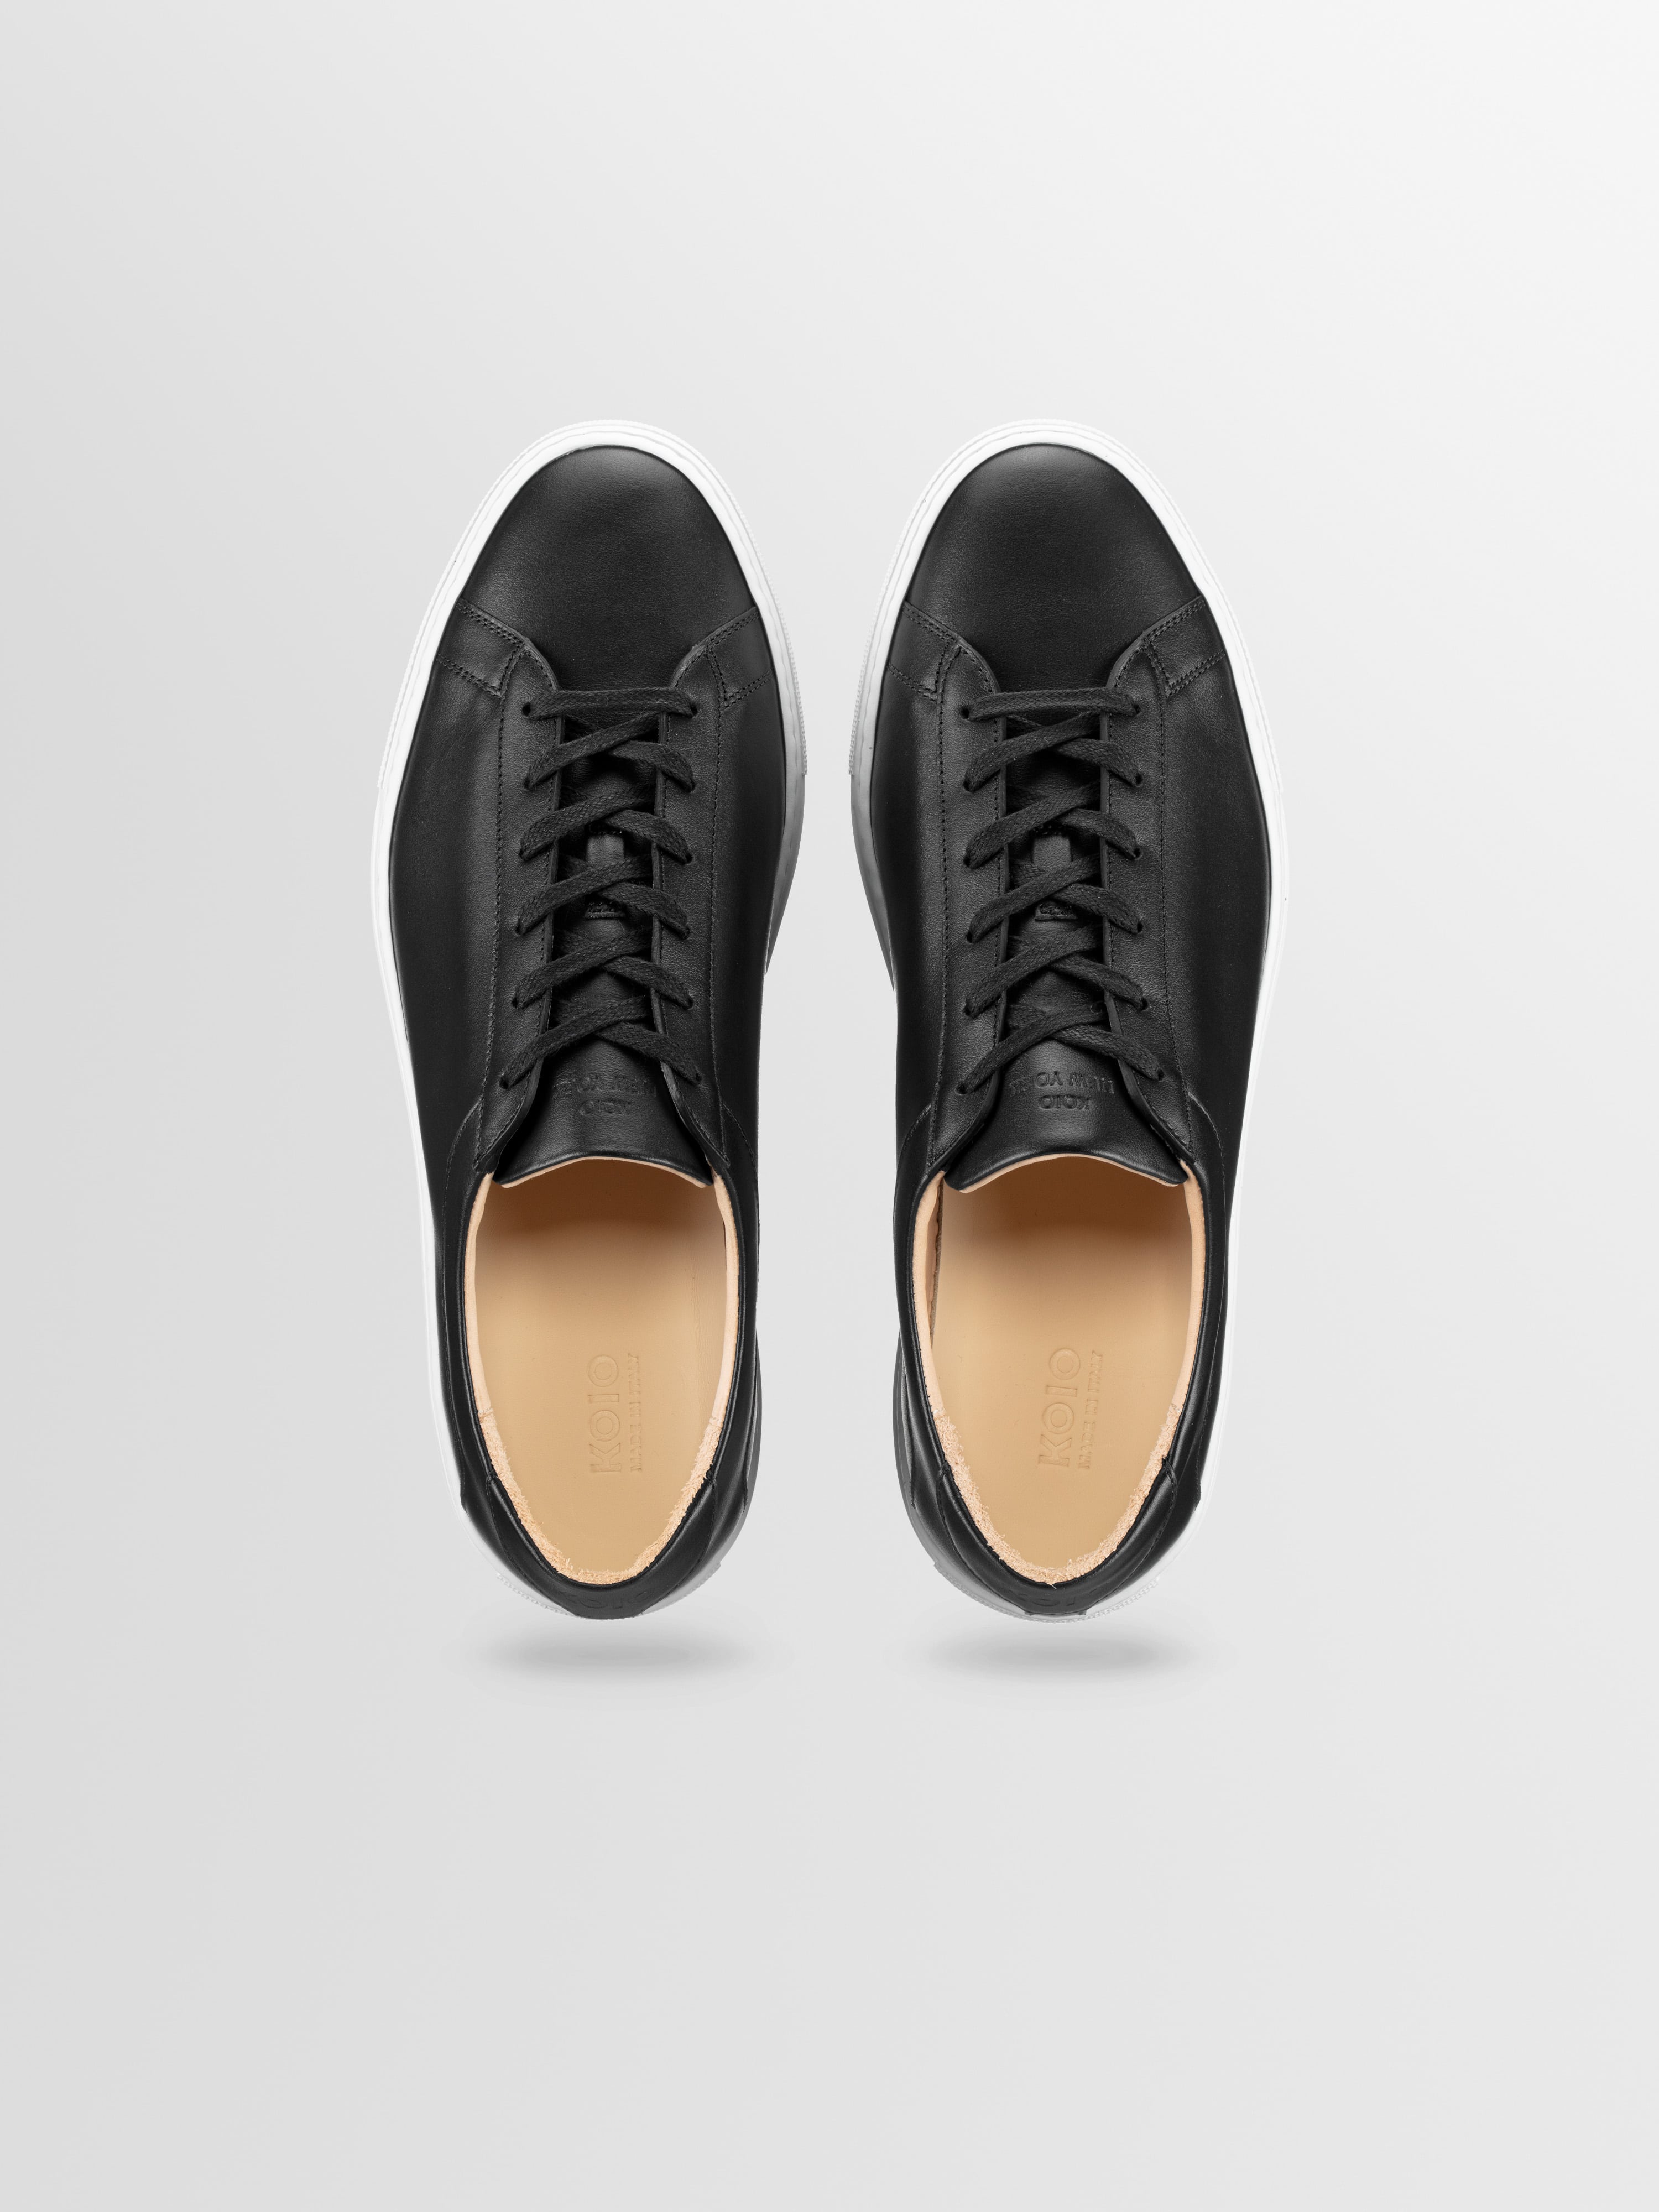 Men's Black Leather Sneakers, Capri Wide Fit in Onyx